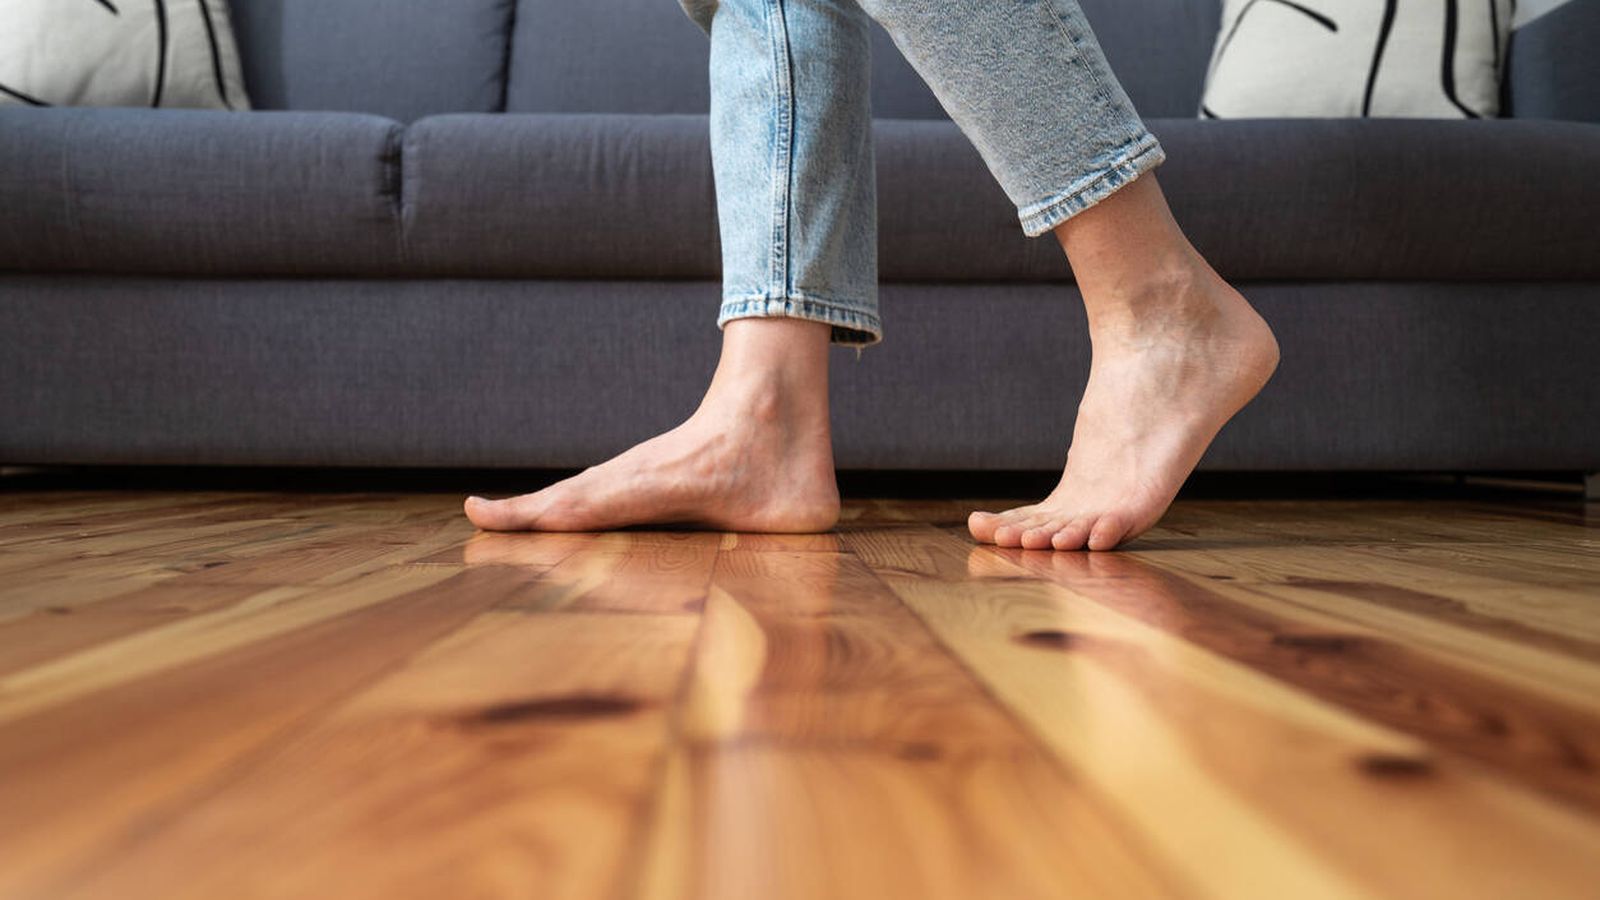 Calzado Barefoot ofrece asesoría para lograr una transición al calzado  barefoot perfecta - Empresa 